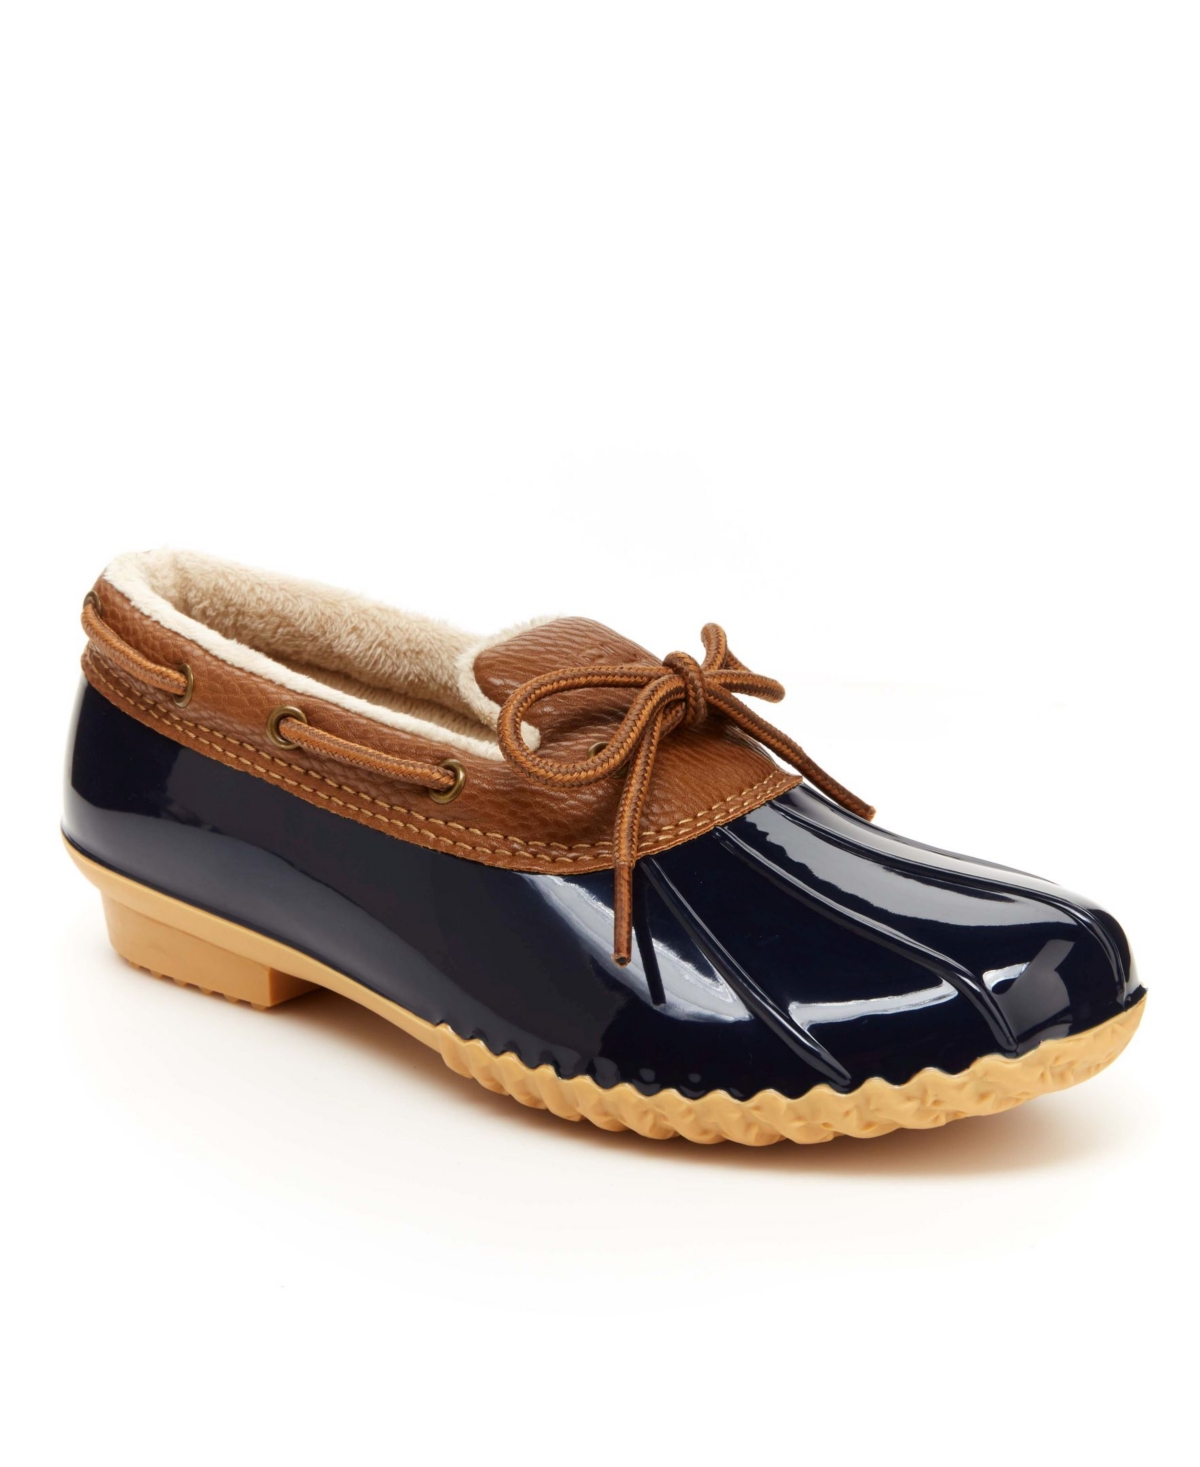 Jbu Woodbury Women's Water-resistant Duck Shoe Women's Shoes